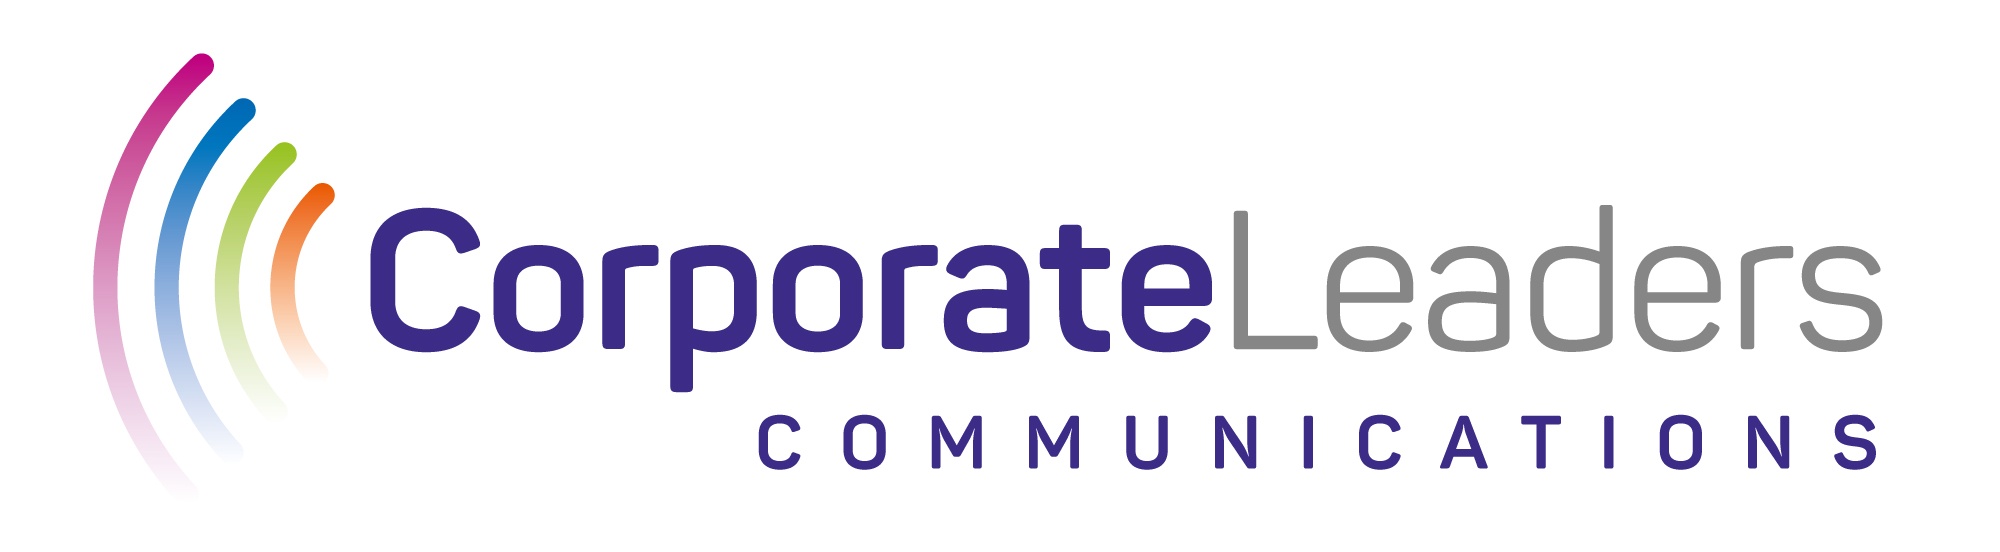 CorporateLeaders_Communications.jpg